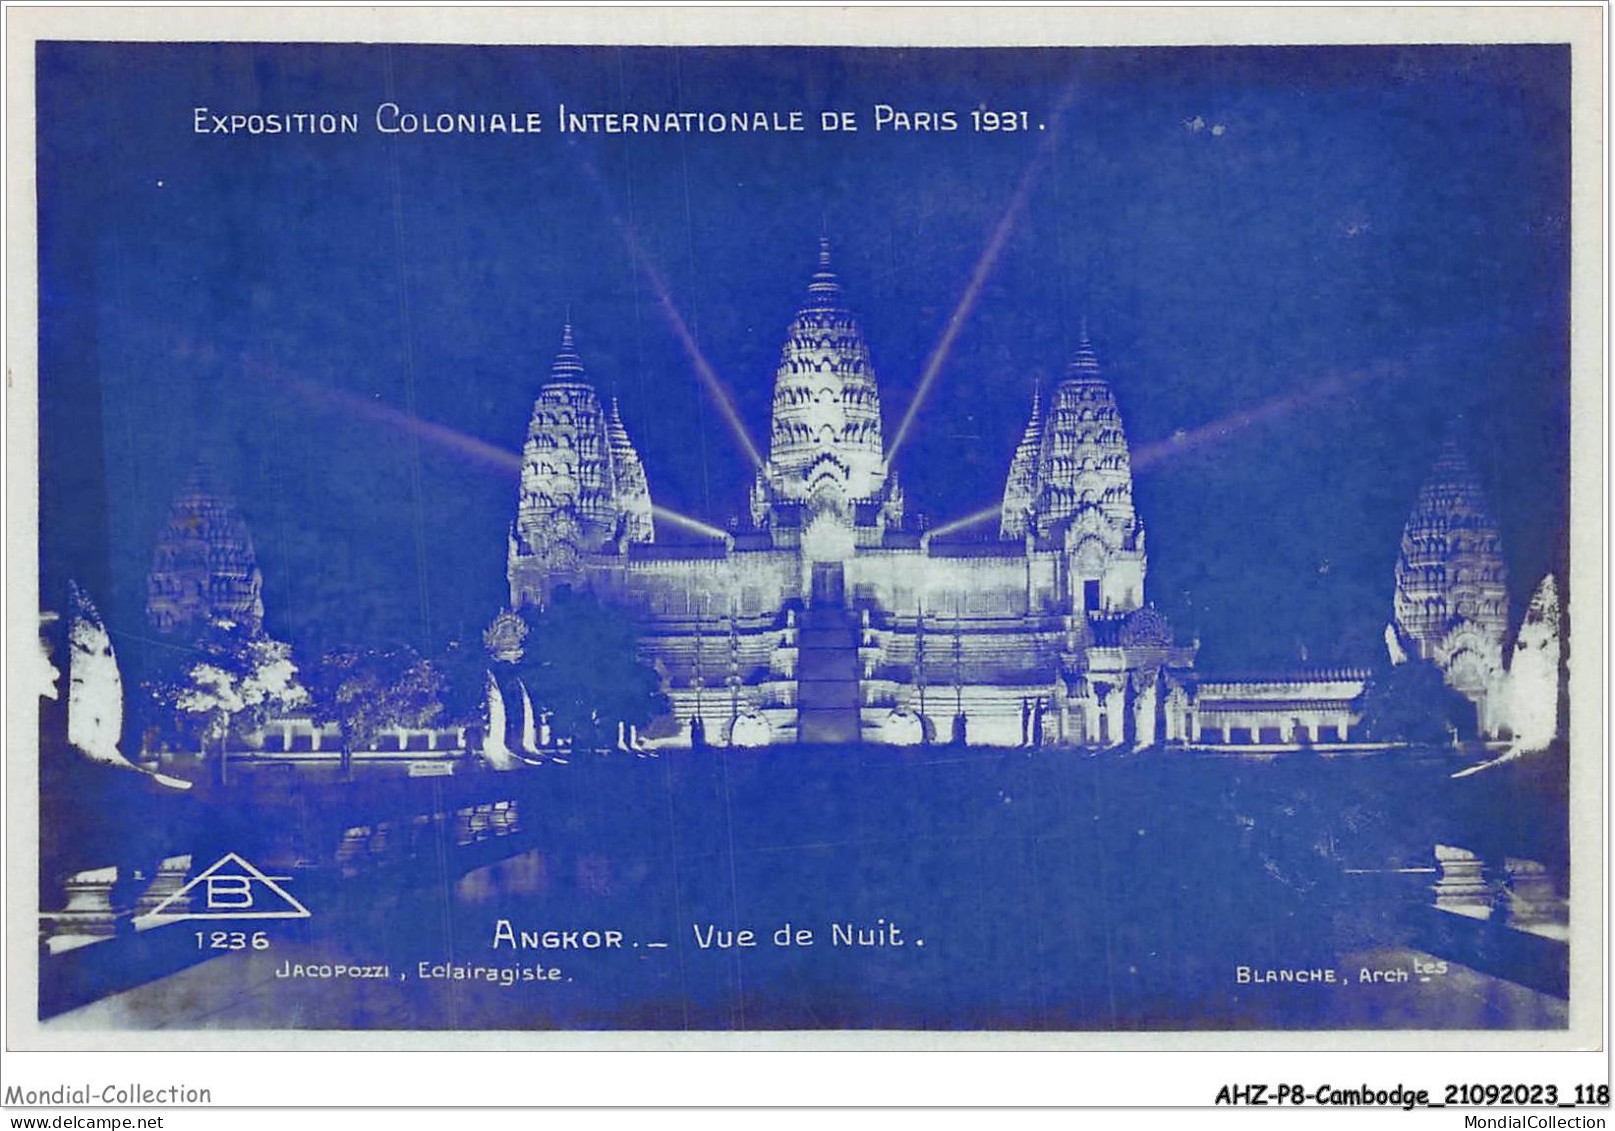 AHZP8-CAMBODGE-0742 - EXPOSITION COLONIALE INTERNATIONALE - PARIS 1931 - ANGKOR - VUE DE NUIT - Cambodia